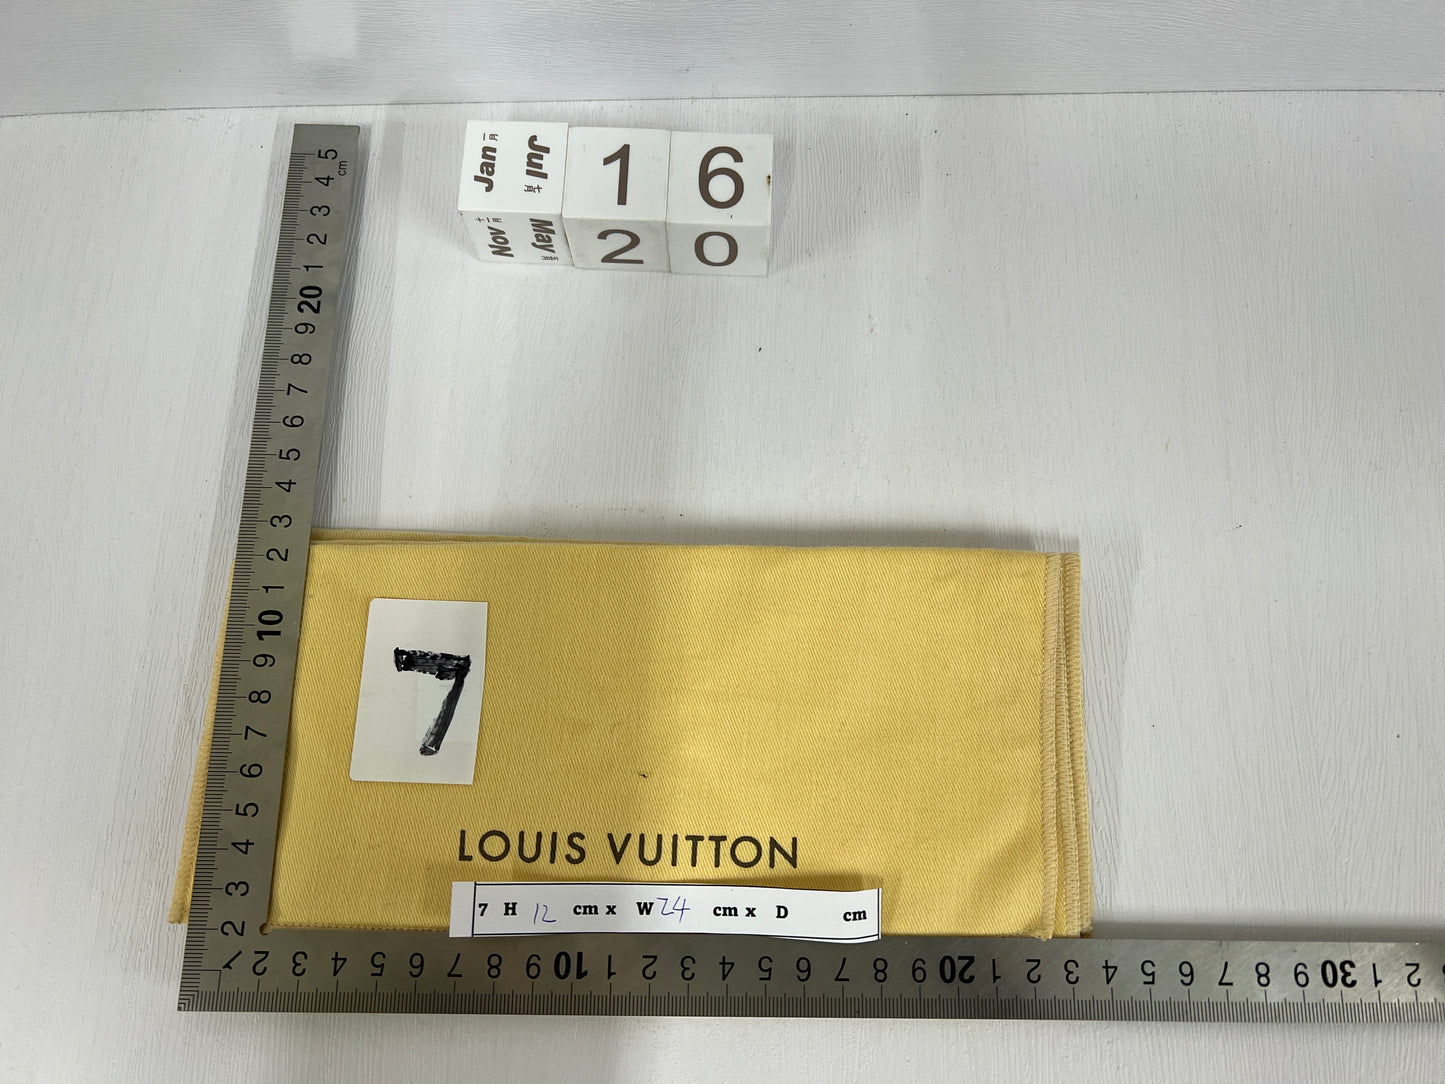 Louis,Chanel, Coach, Prada, Gucci, Salvatore dust bag for wallet handbag jewllery - 16 Jan 2023